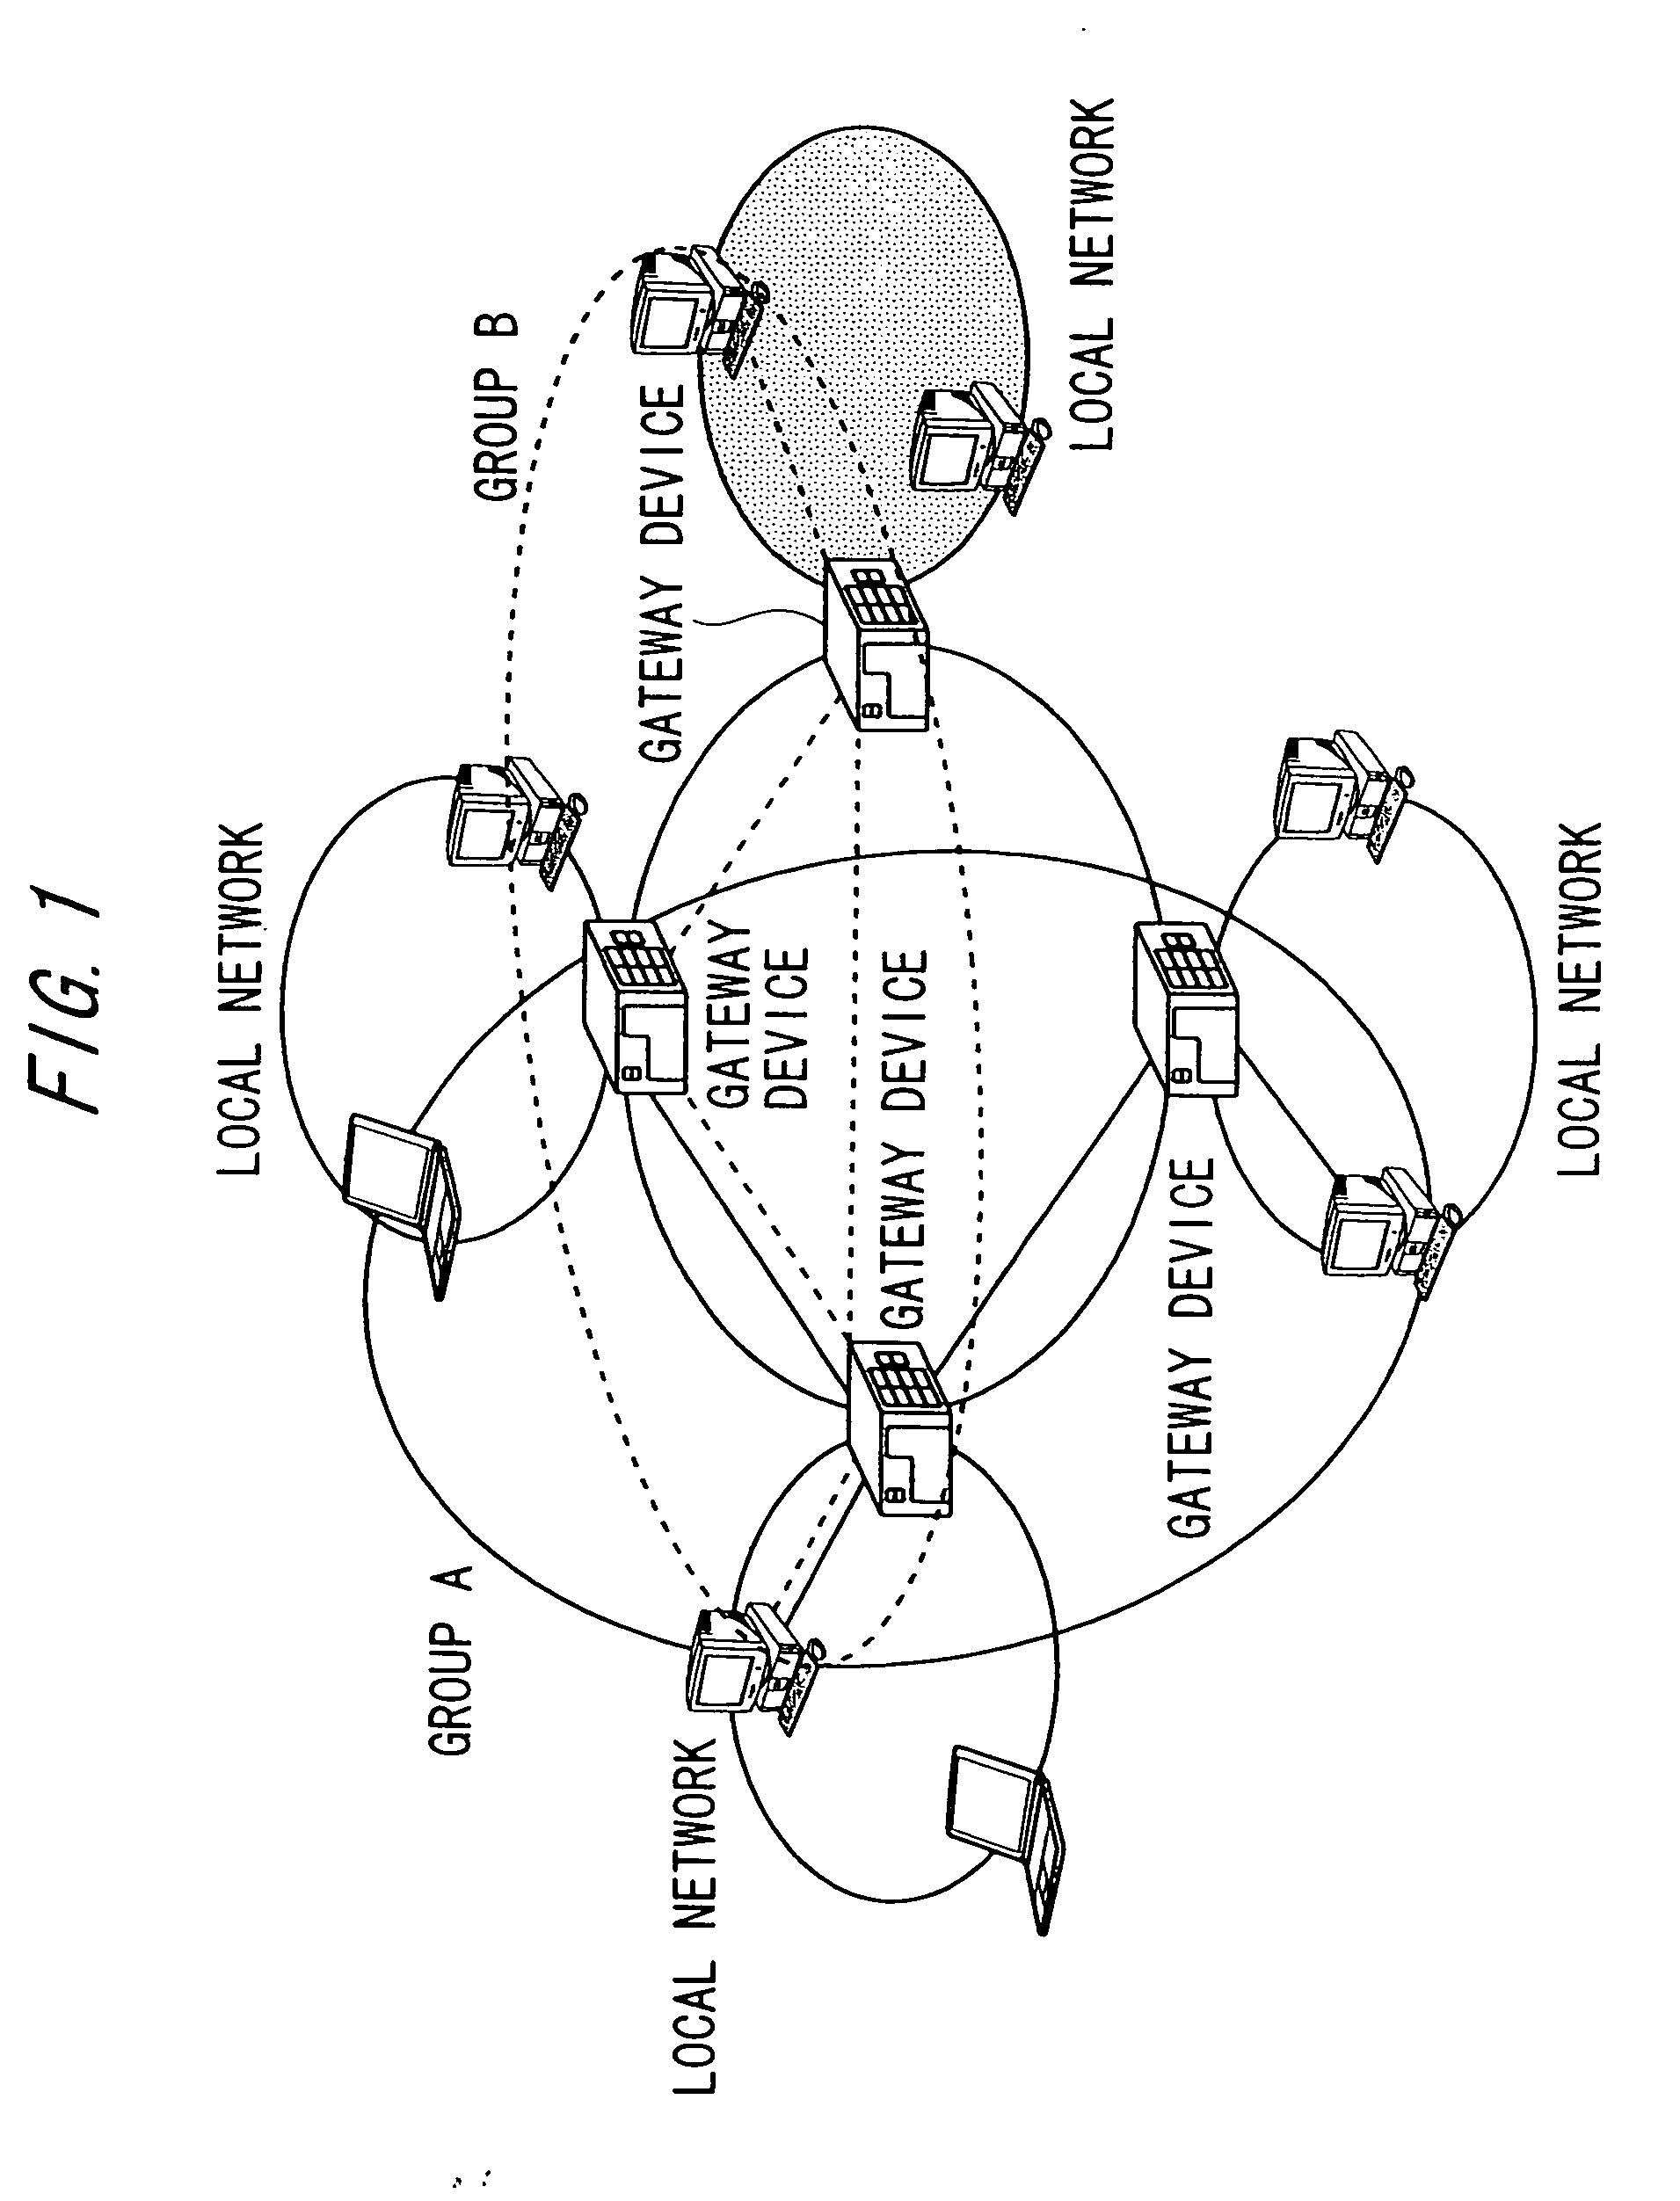 Packet relay apparatus